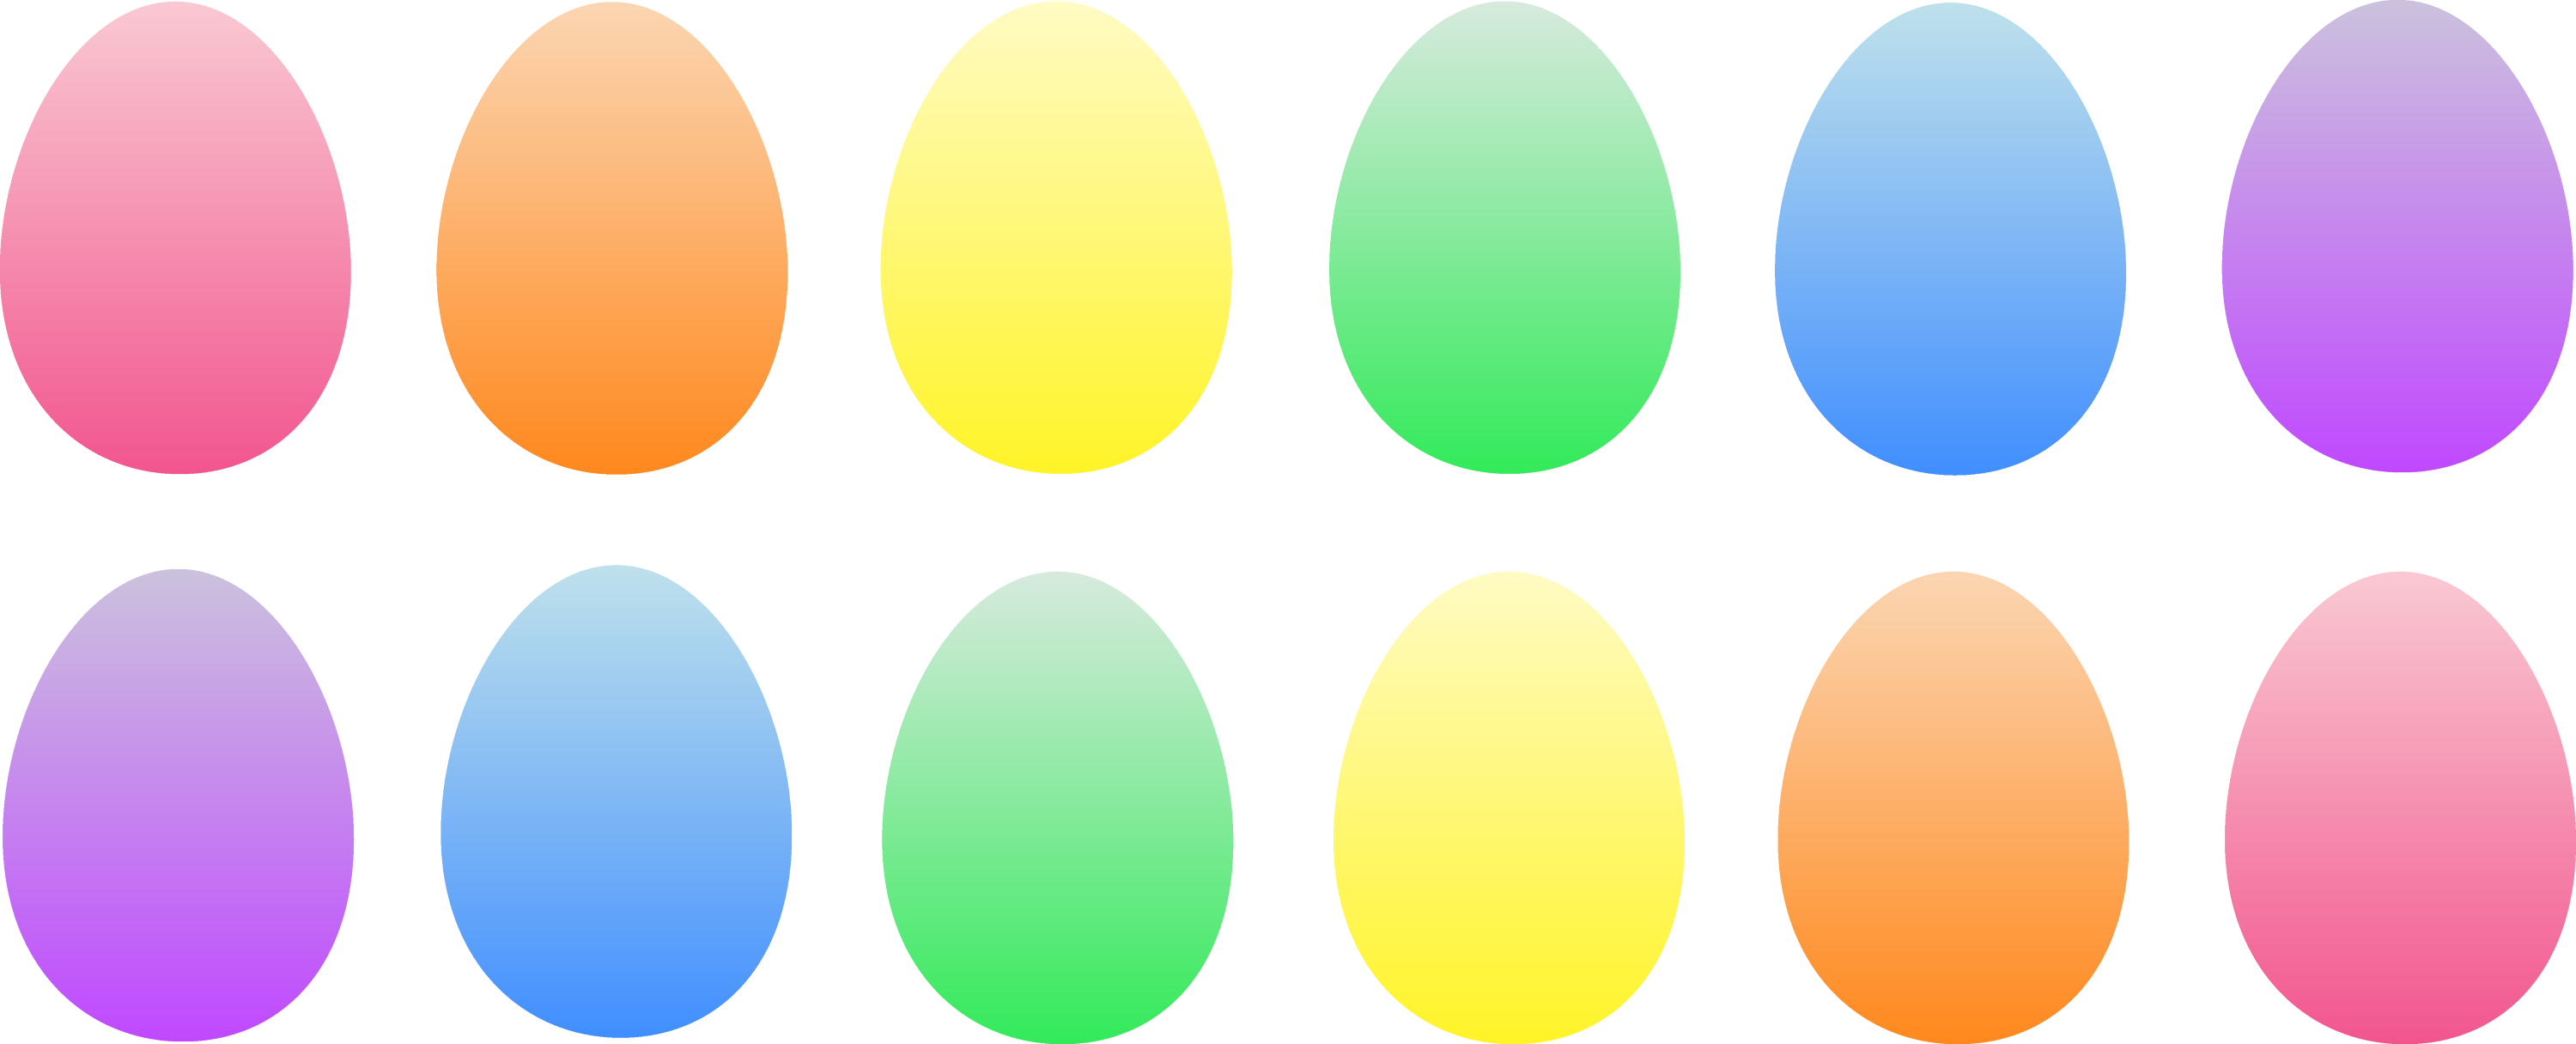 a-dozen-colored-easter-eggs-free-clip-art